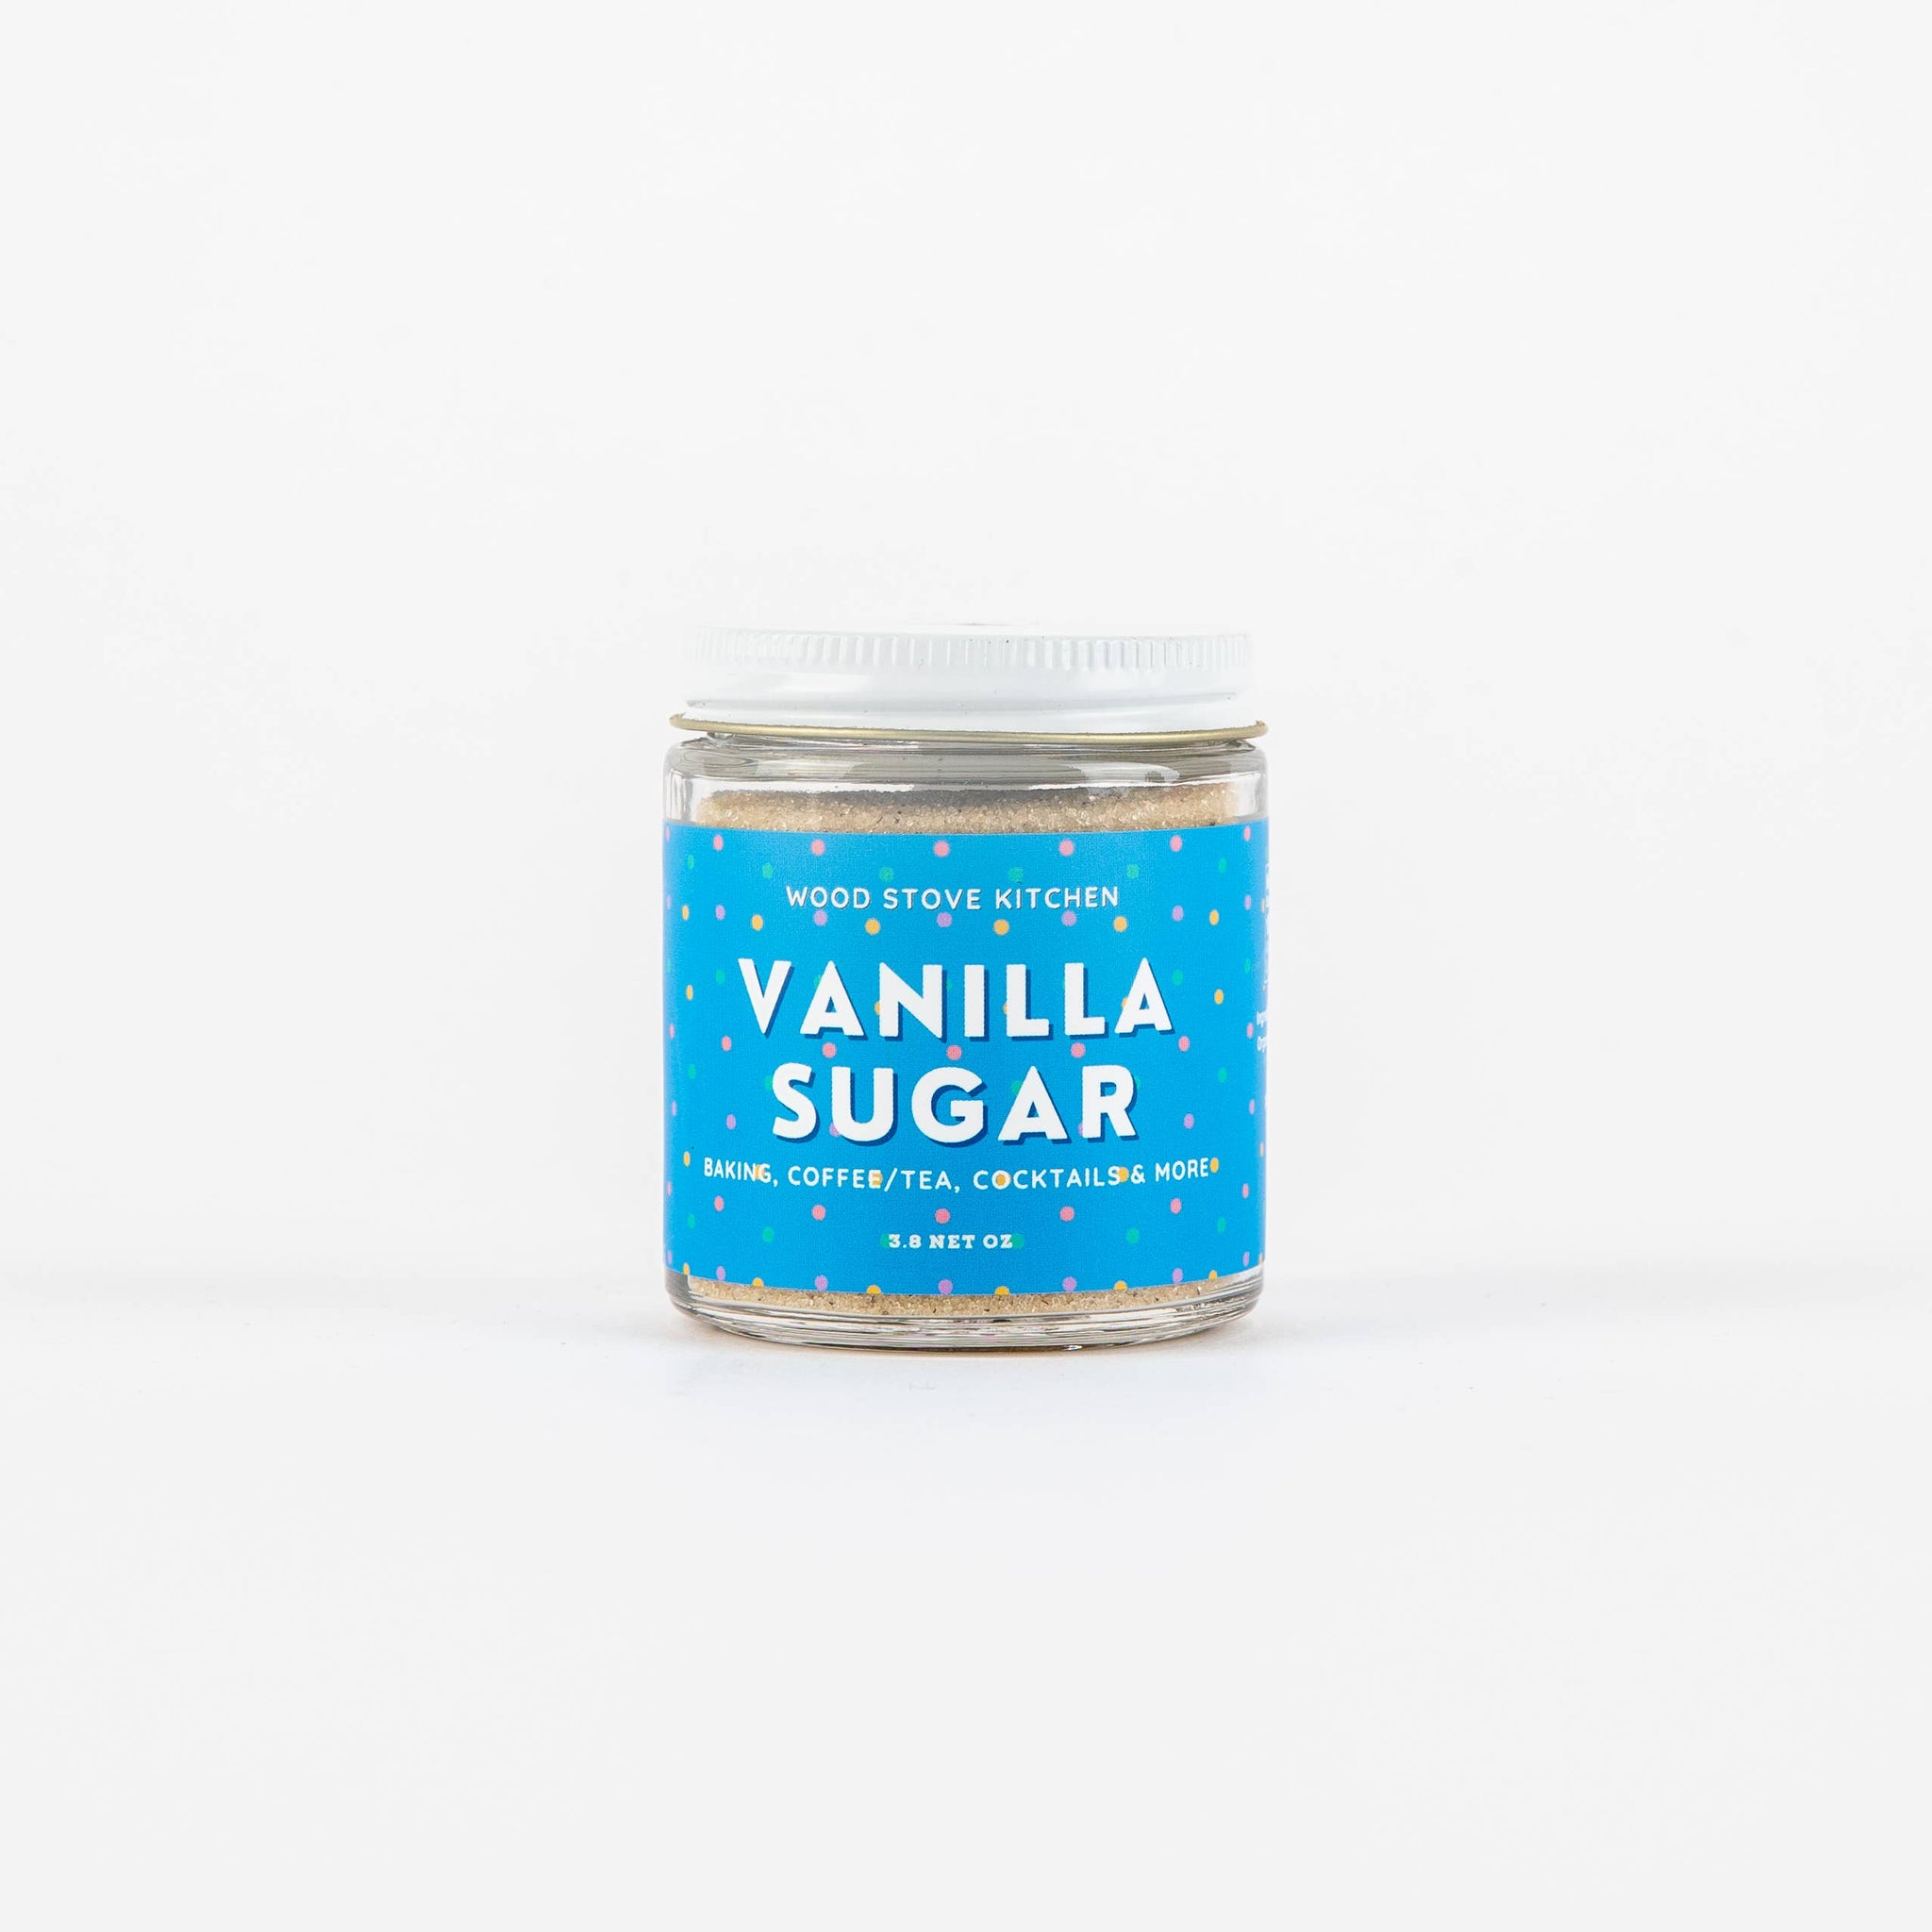 Sugar, Vanilla, 3.8 Net Oz